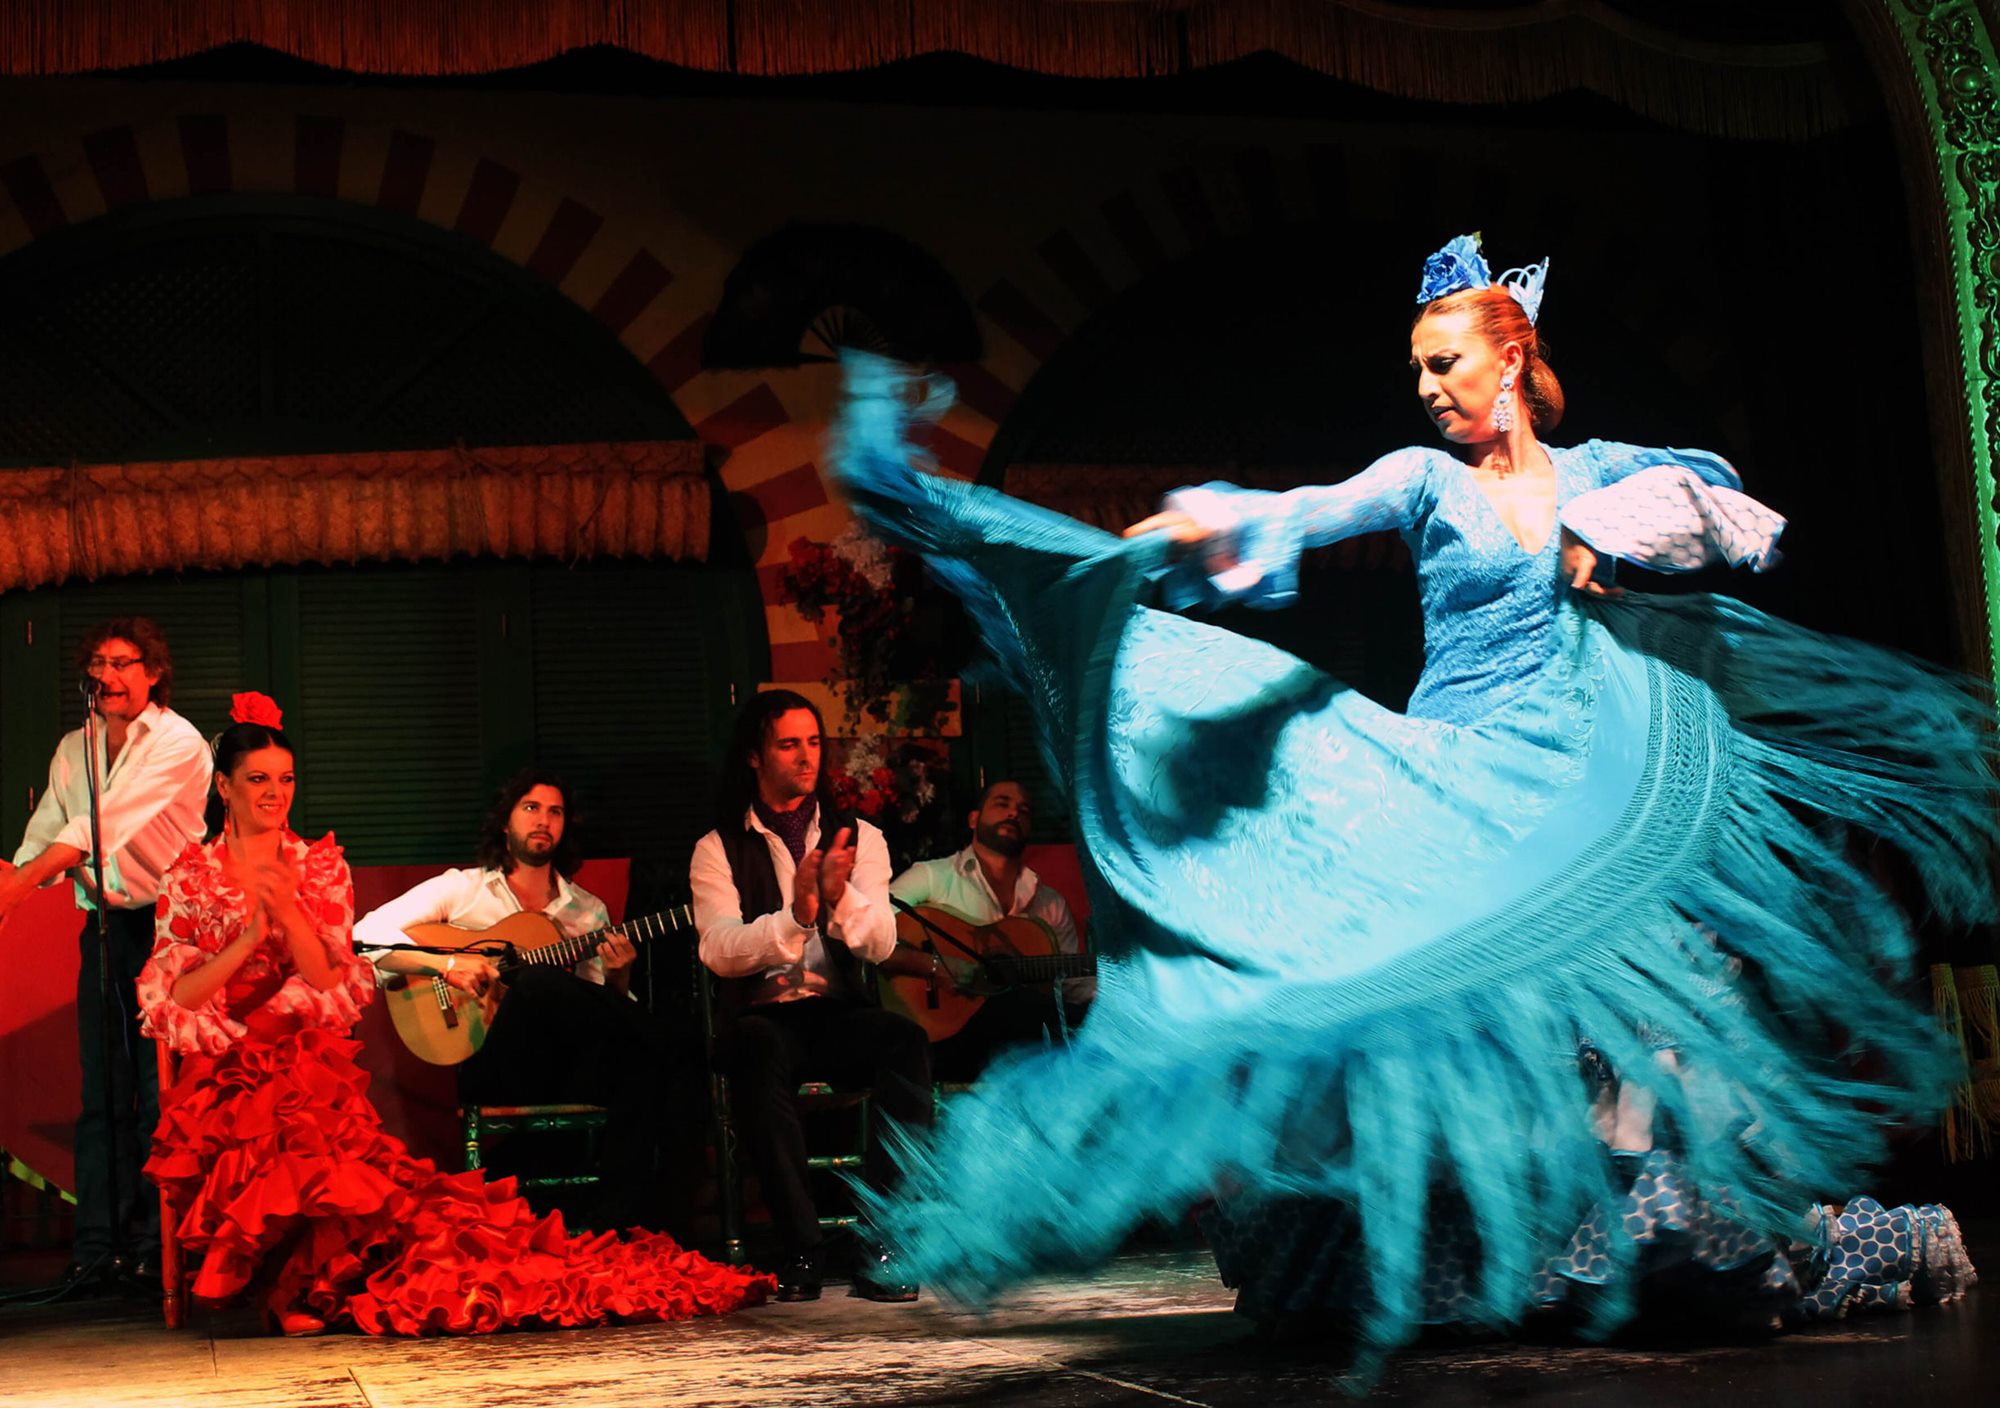 reservar online Espectáculo Flamenco en Sevilla